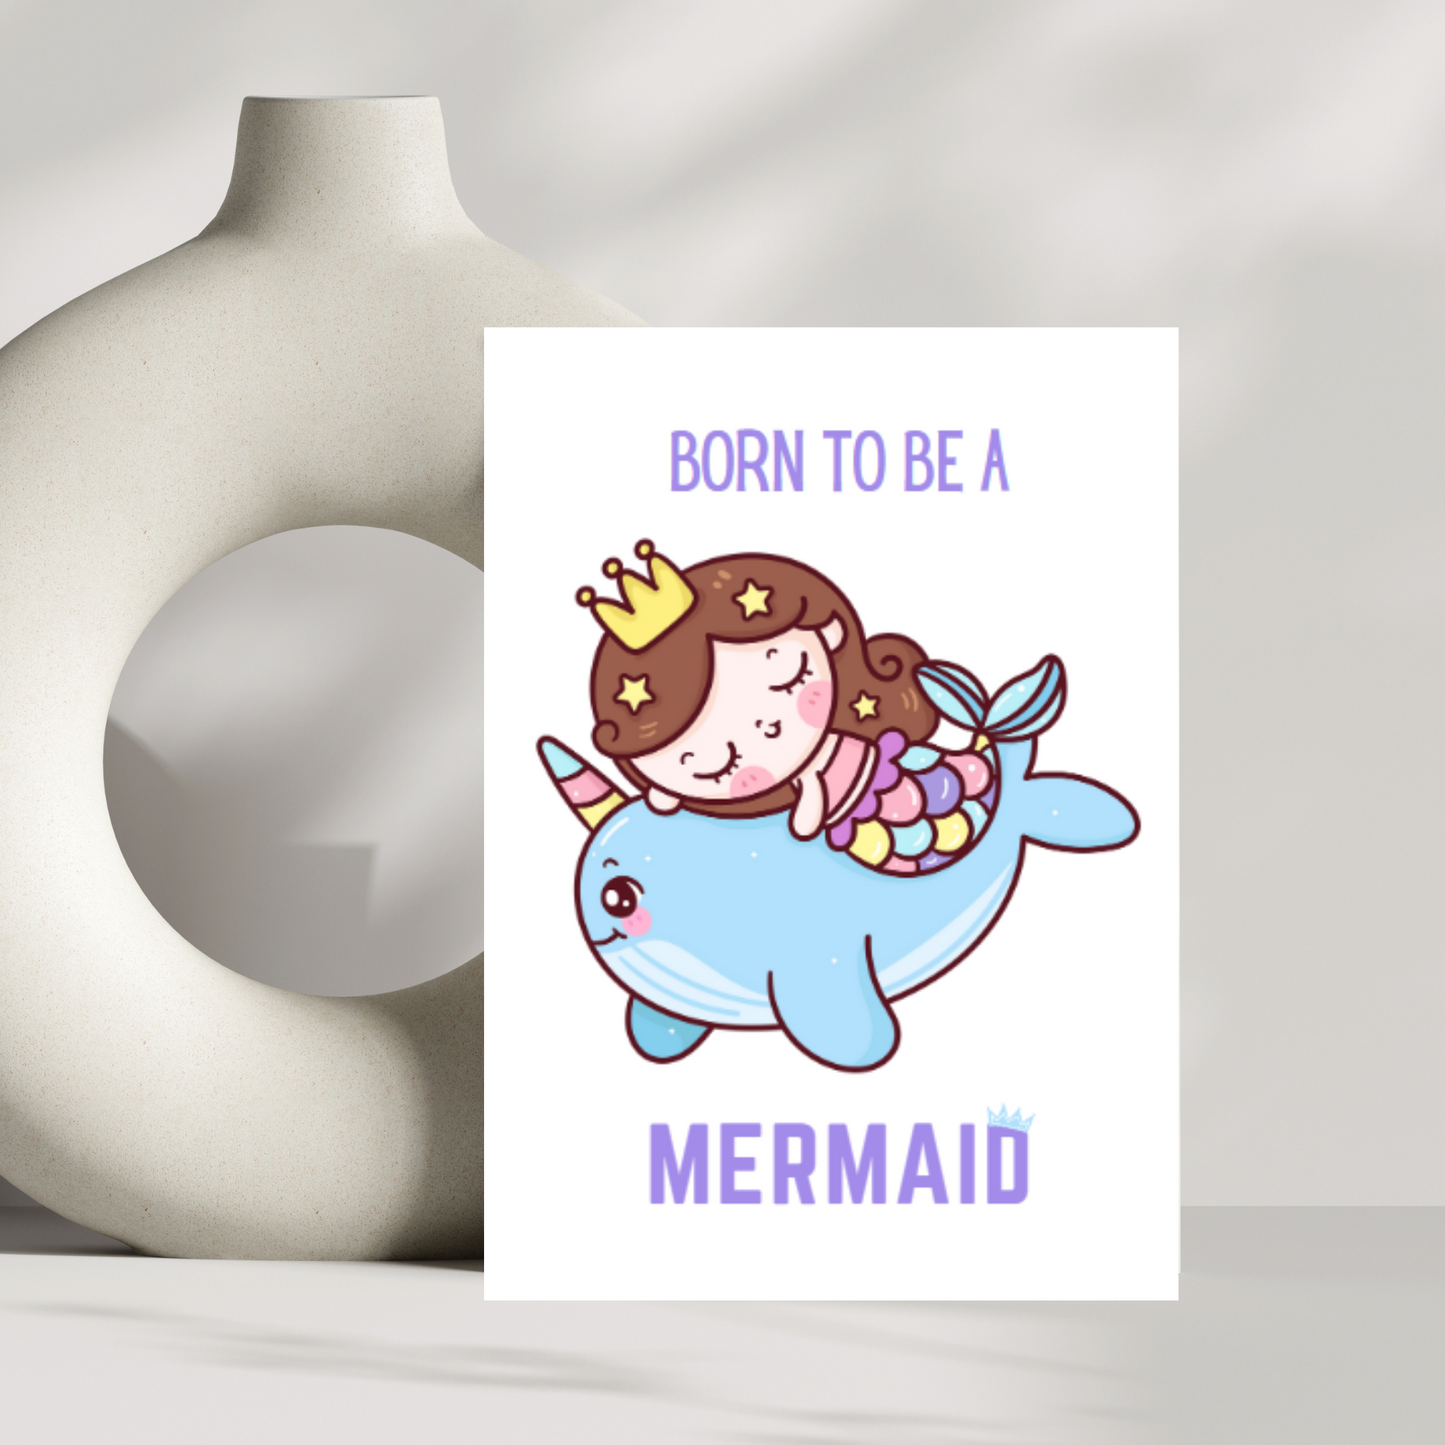 'Born to be a Mermaid' birthday card